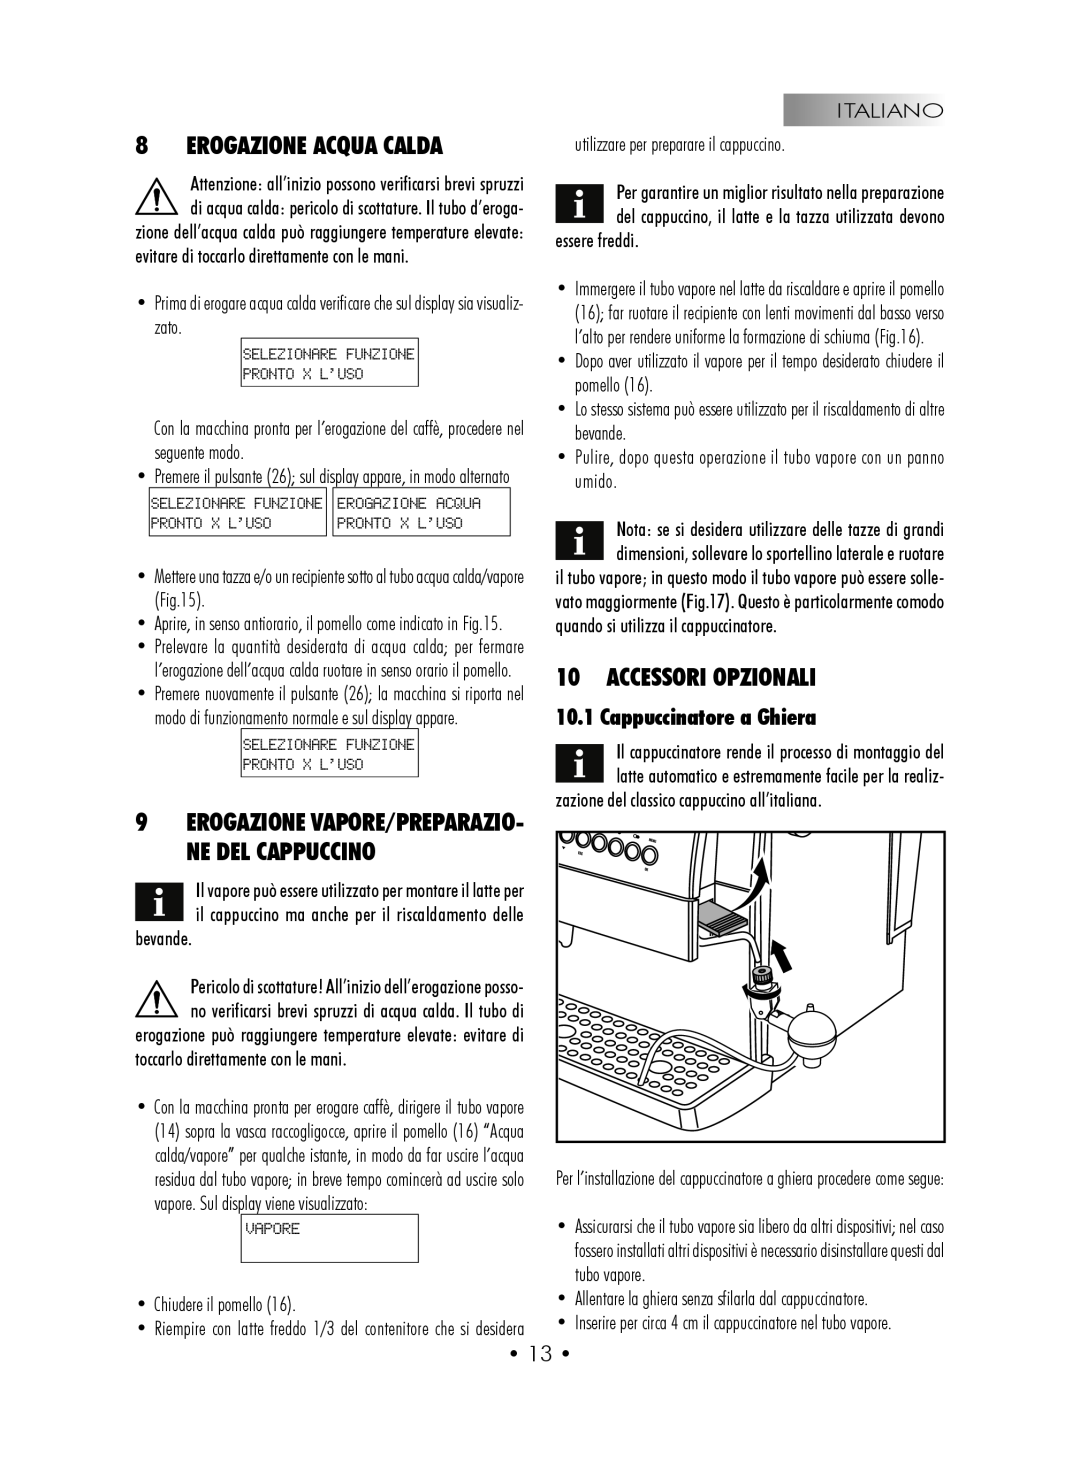 Gaggia SUP027YDR manual Erogazione Acqua Calda, Accessori opzionali, Cappuccinatore a Ghiera 